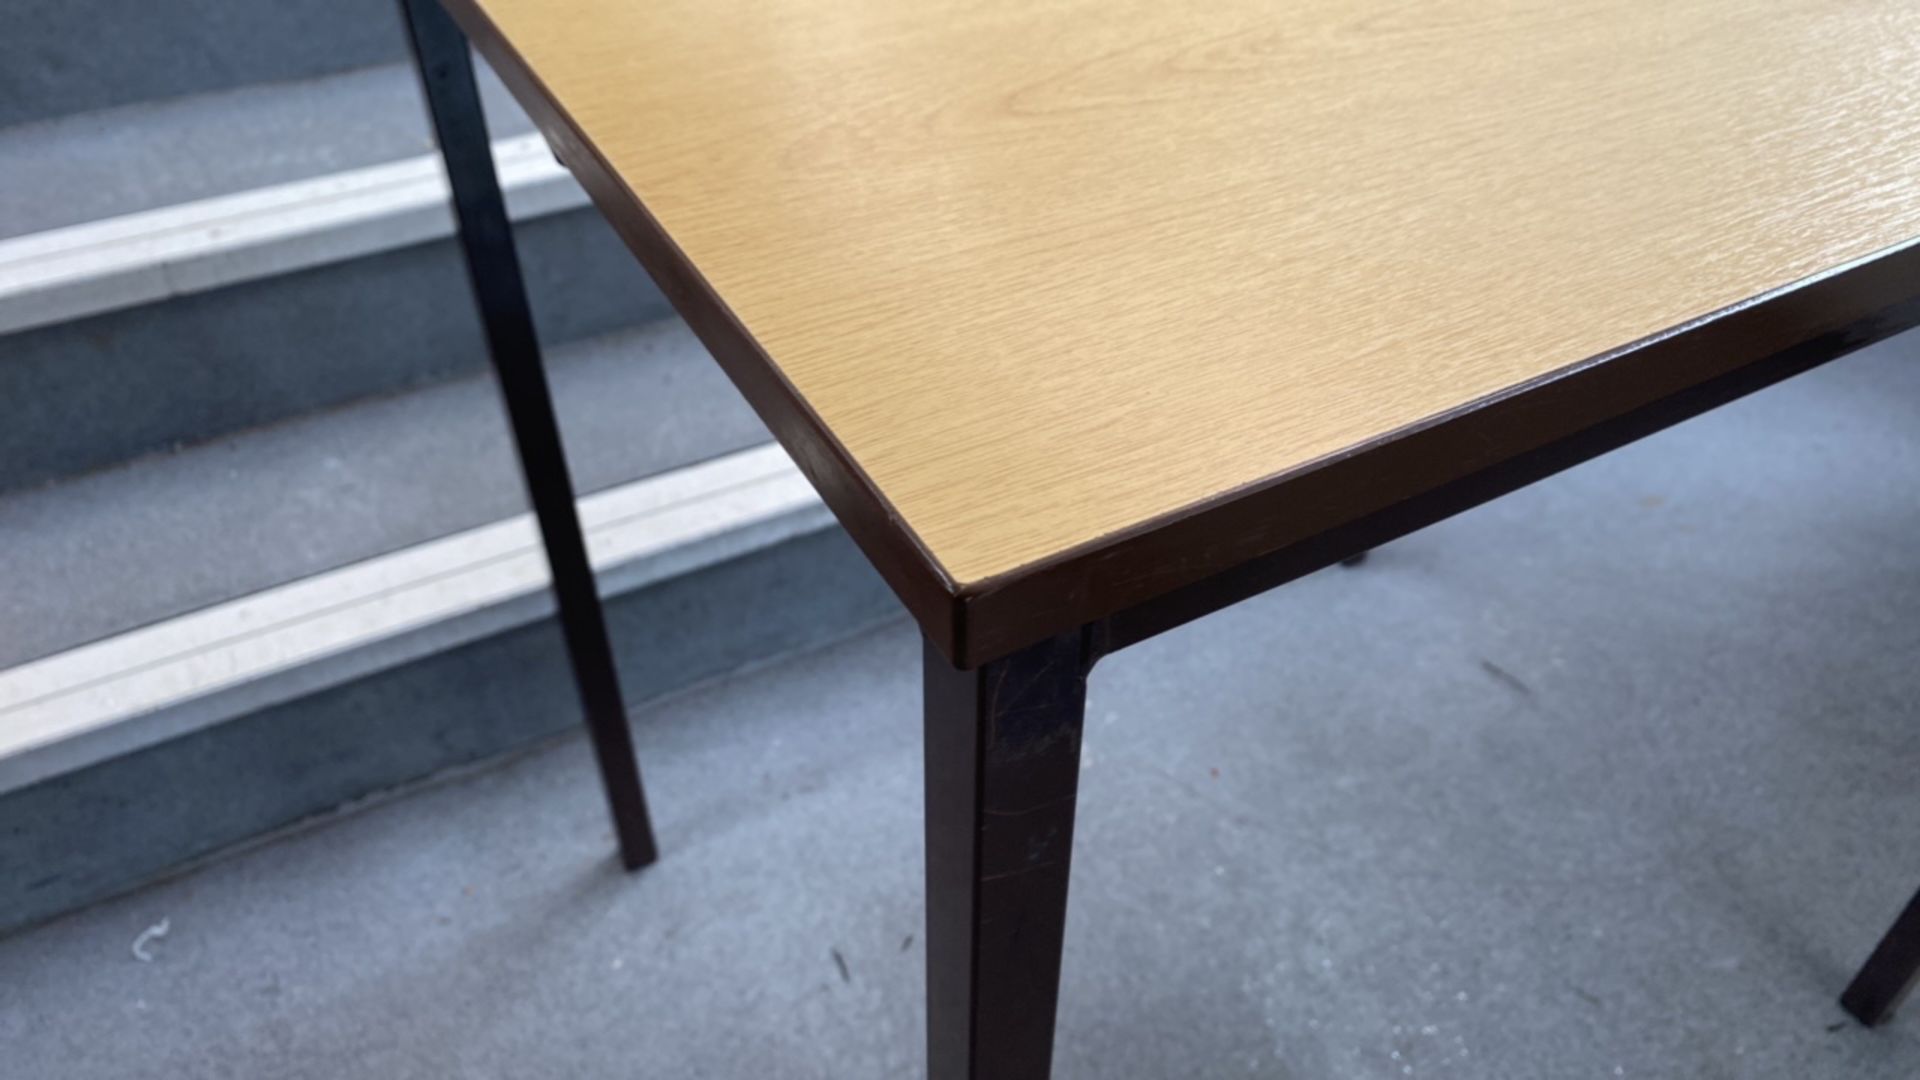 Set of 5 Brown Metal Framed Exam Tables (Brown Edge) - Image 4 of 5